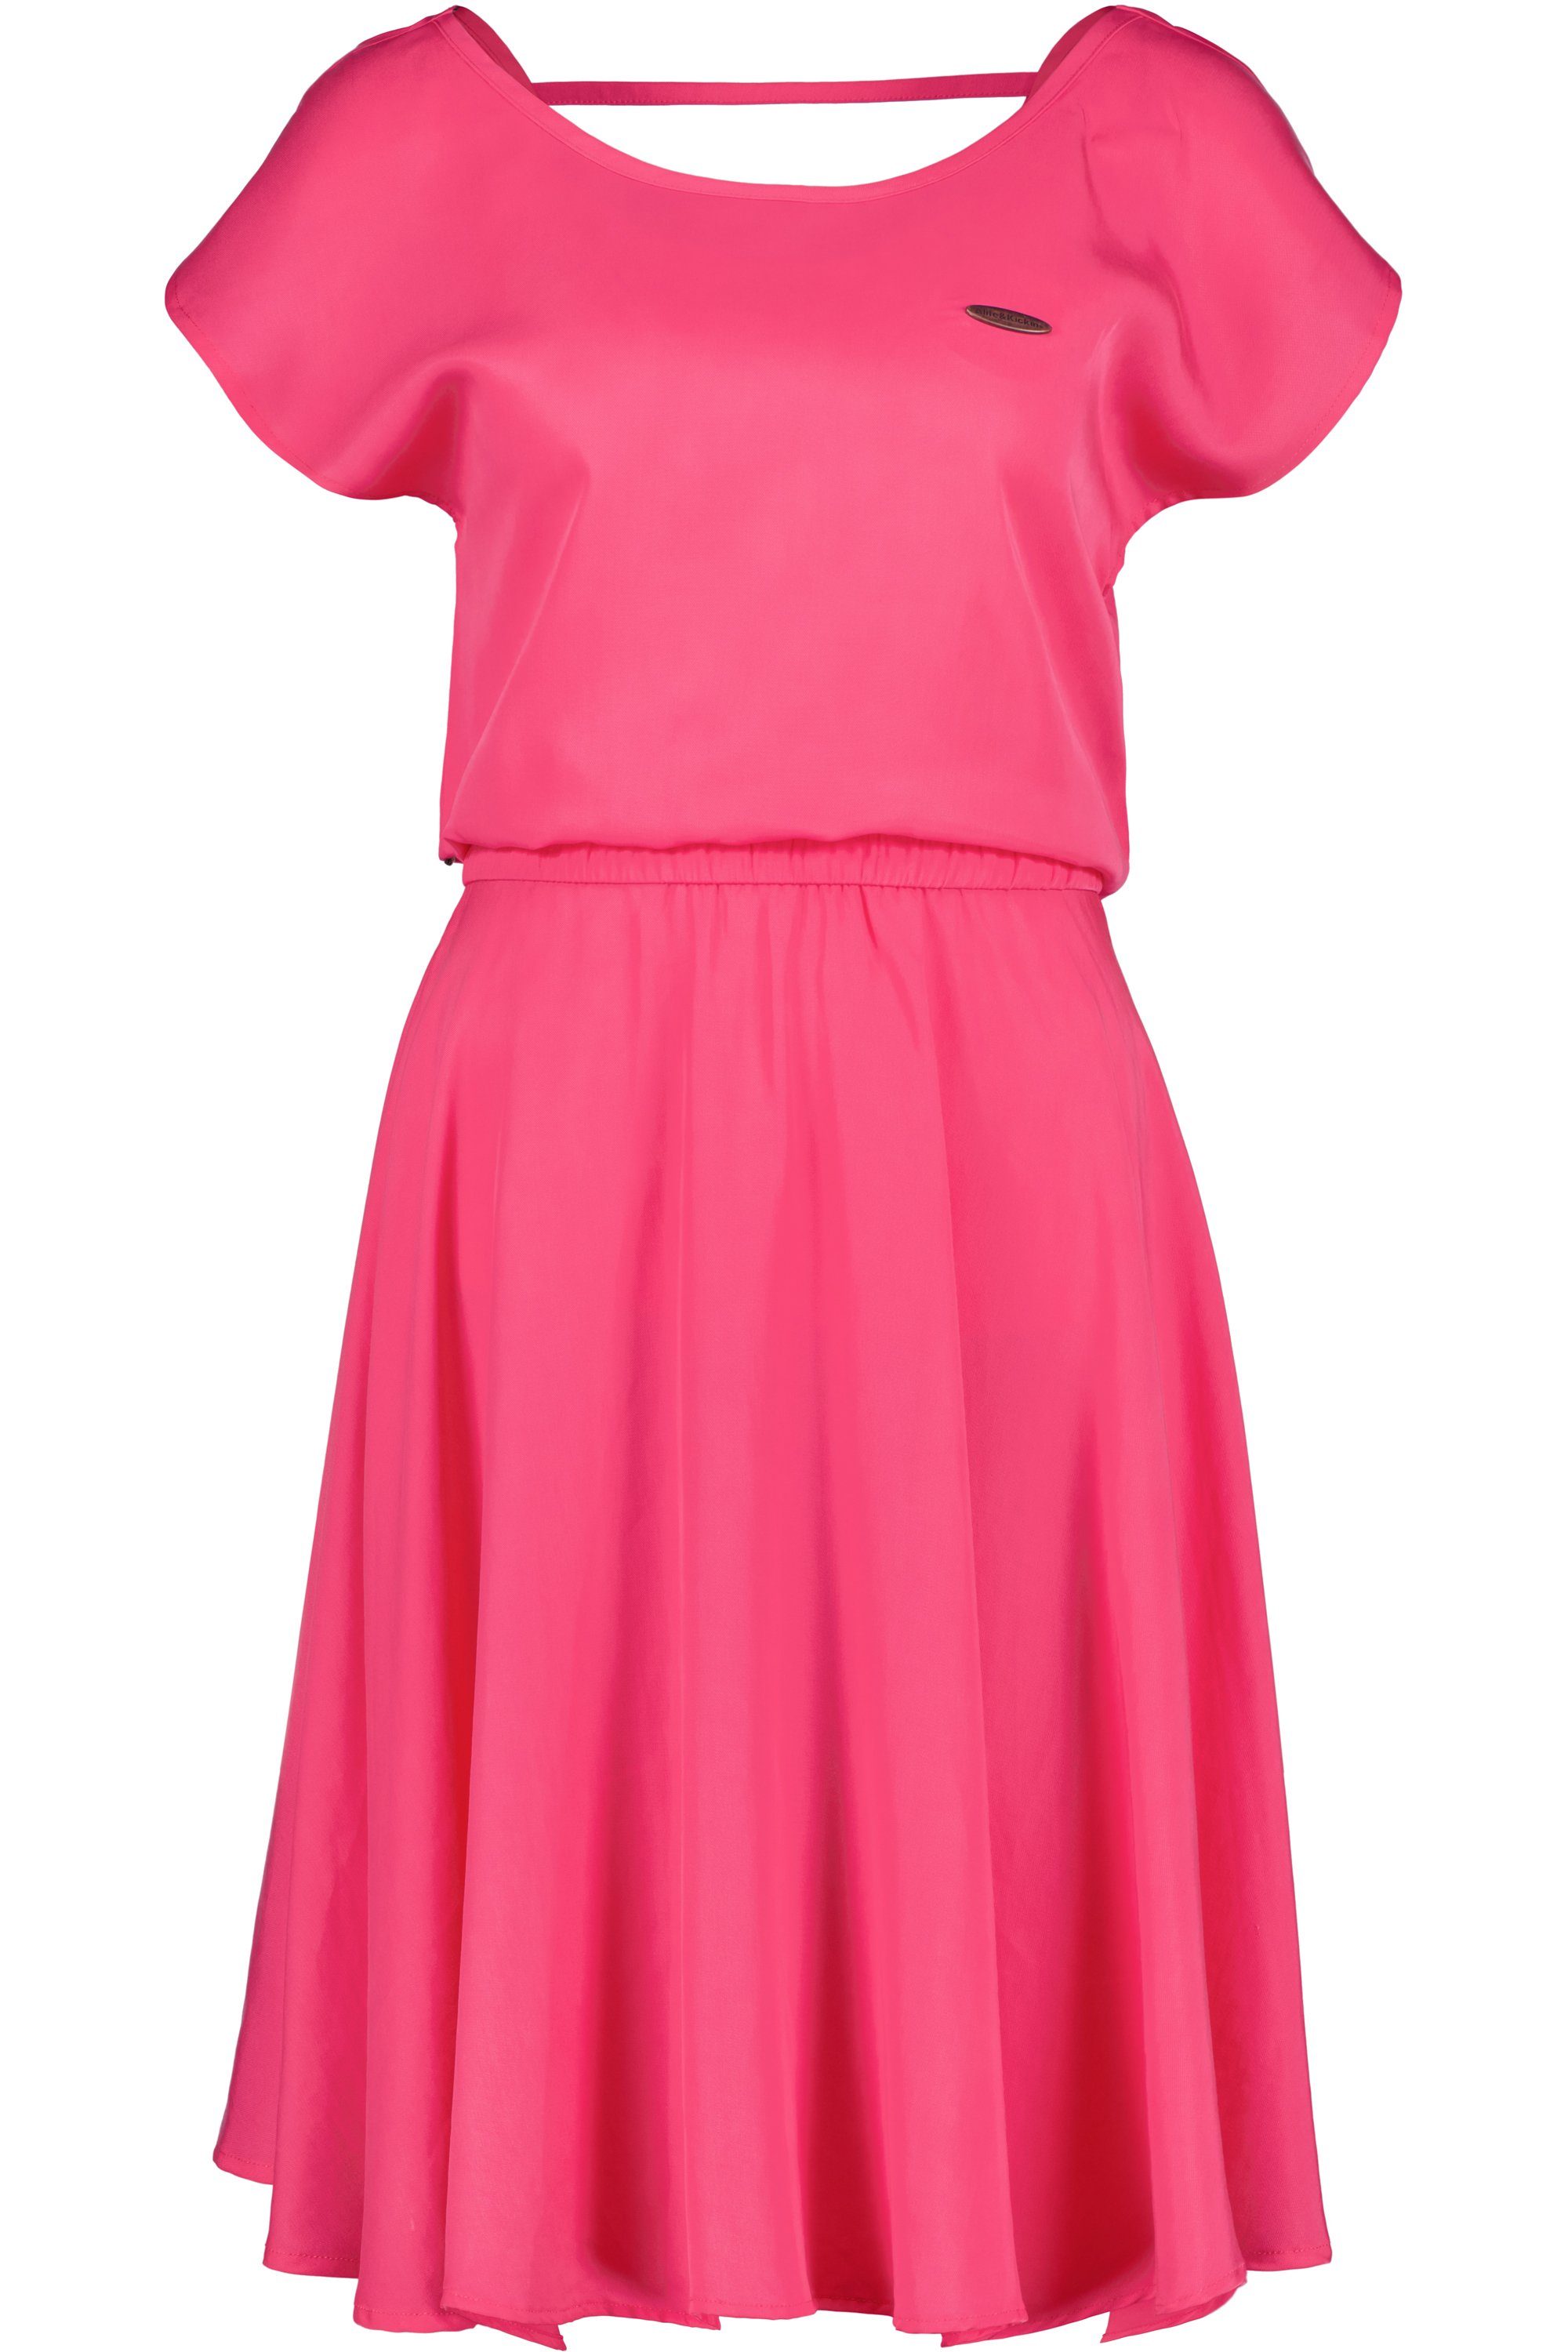 Alife Jerseykleid Damen Kickin flamingo & Sommerkleid, Kleid Dress IsabellaAK